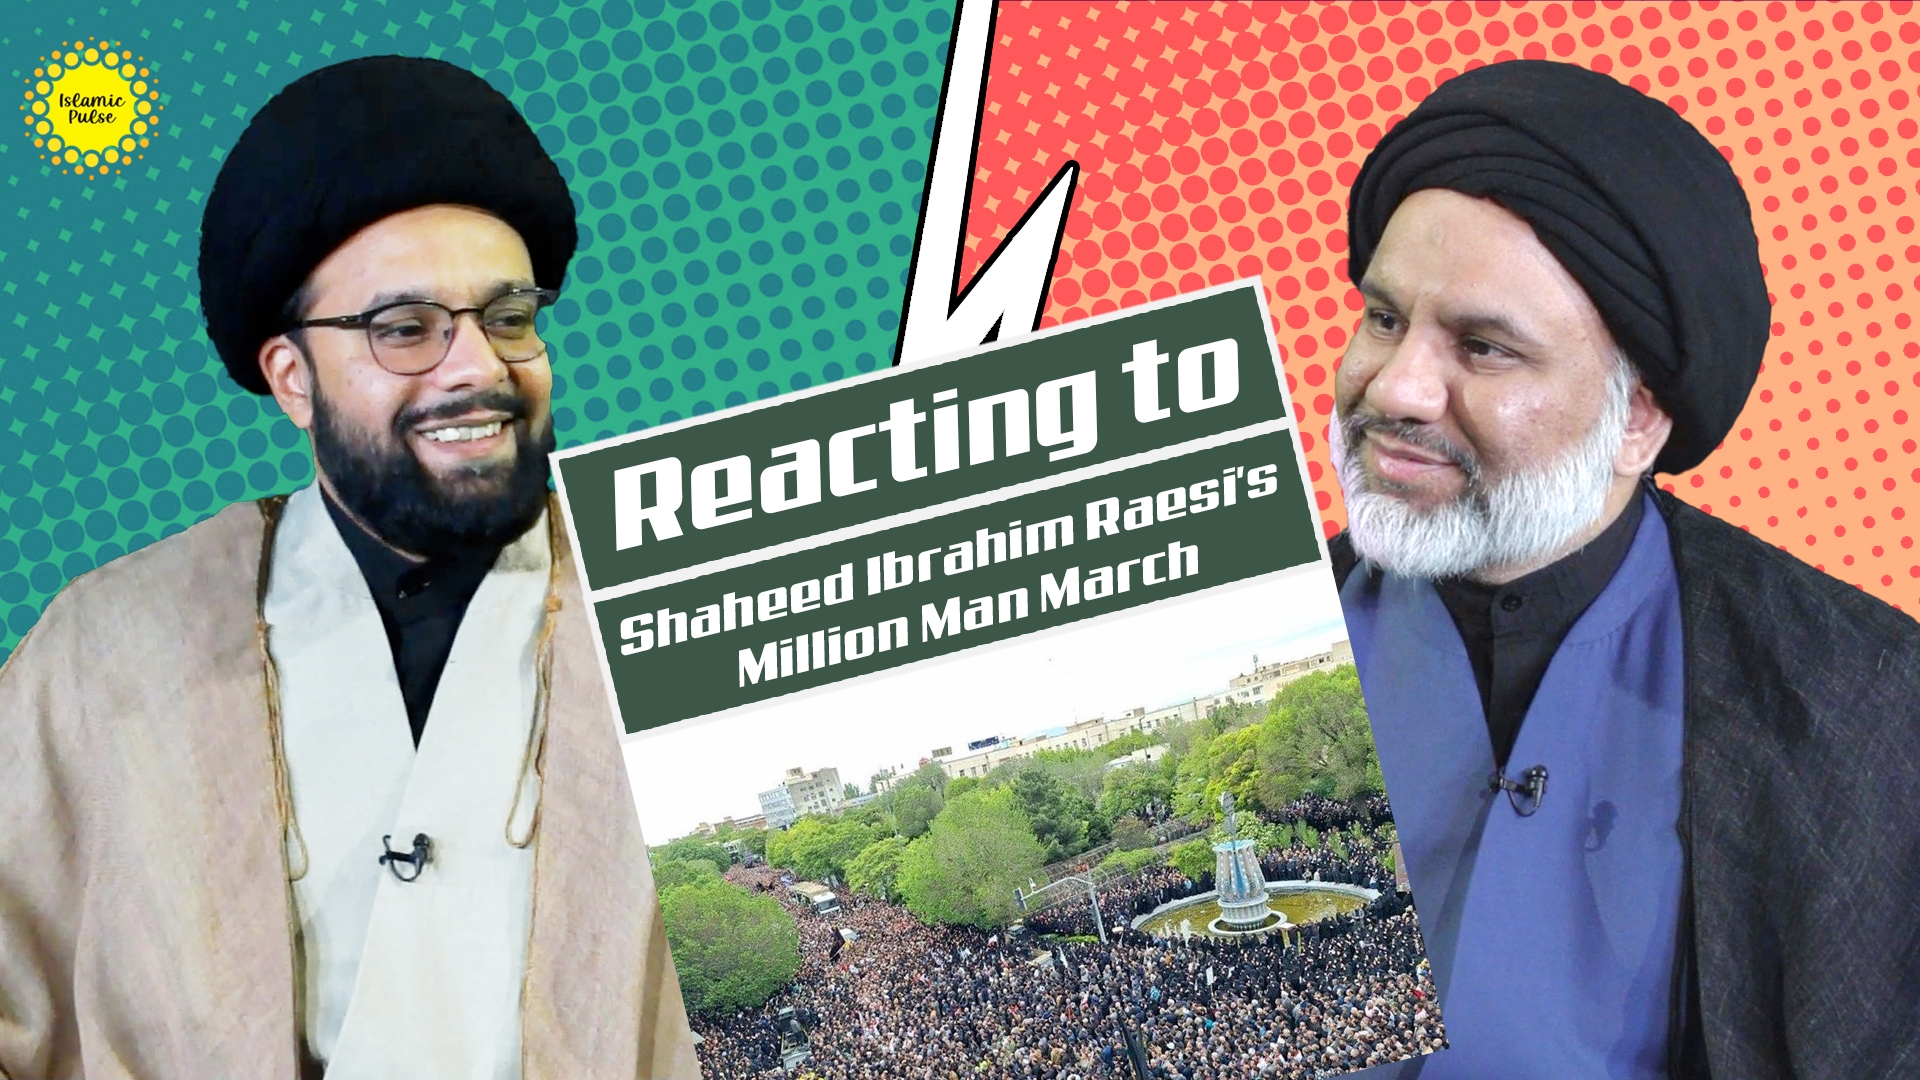 Shaheed Ibrahim Raesi's Million Man March | Reaction Time | English